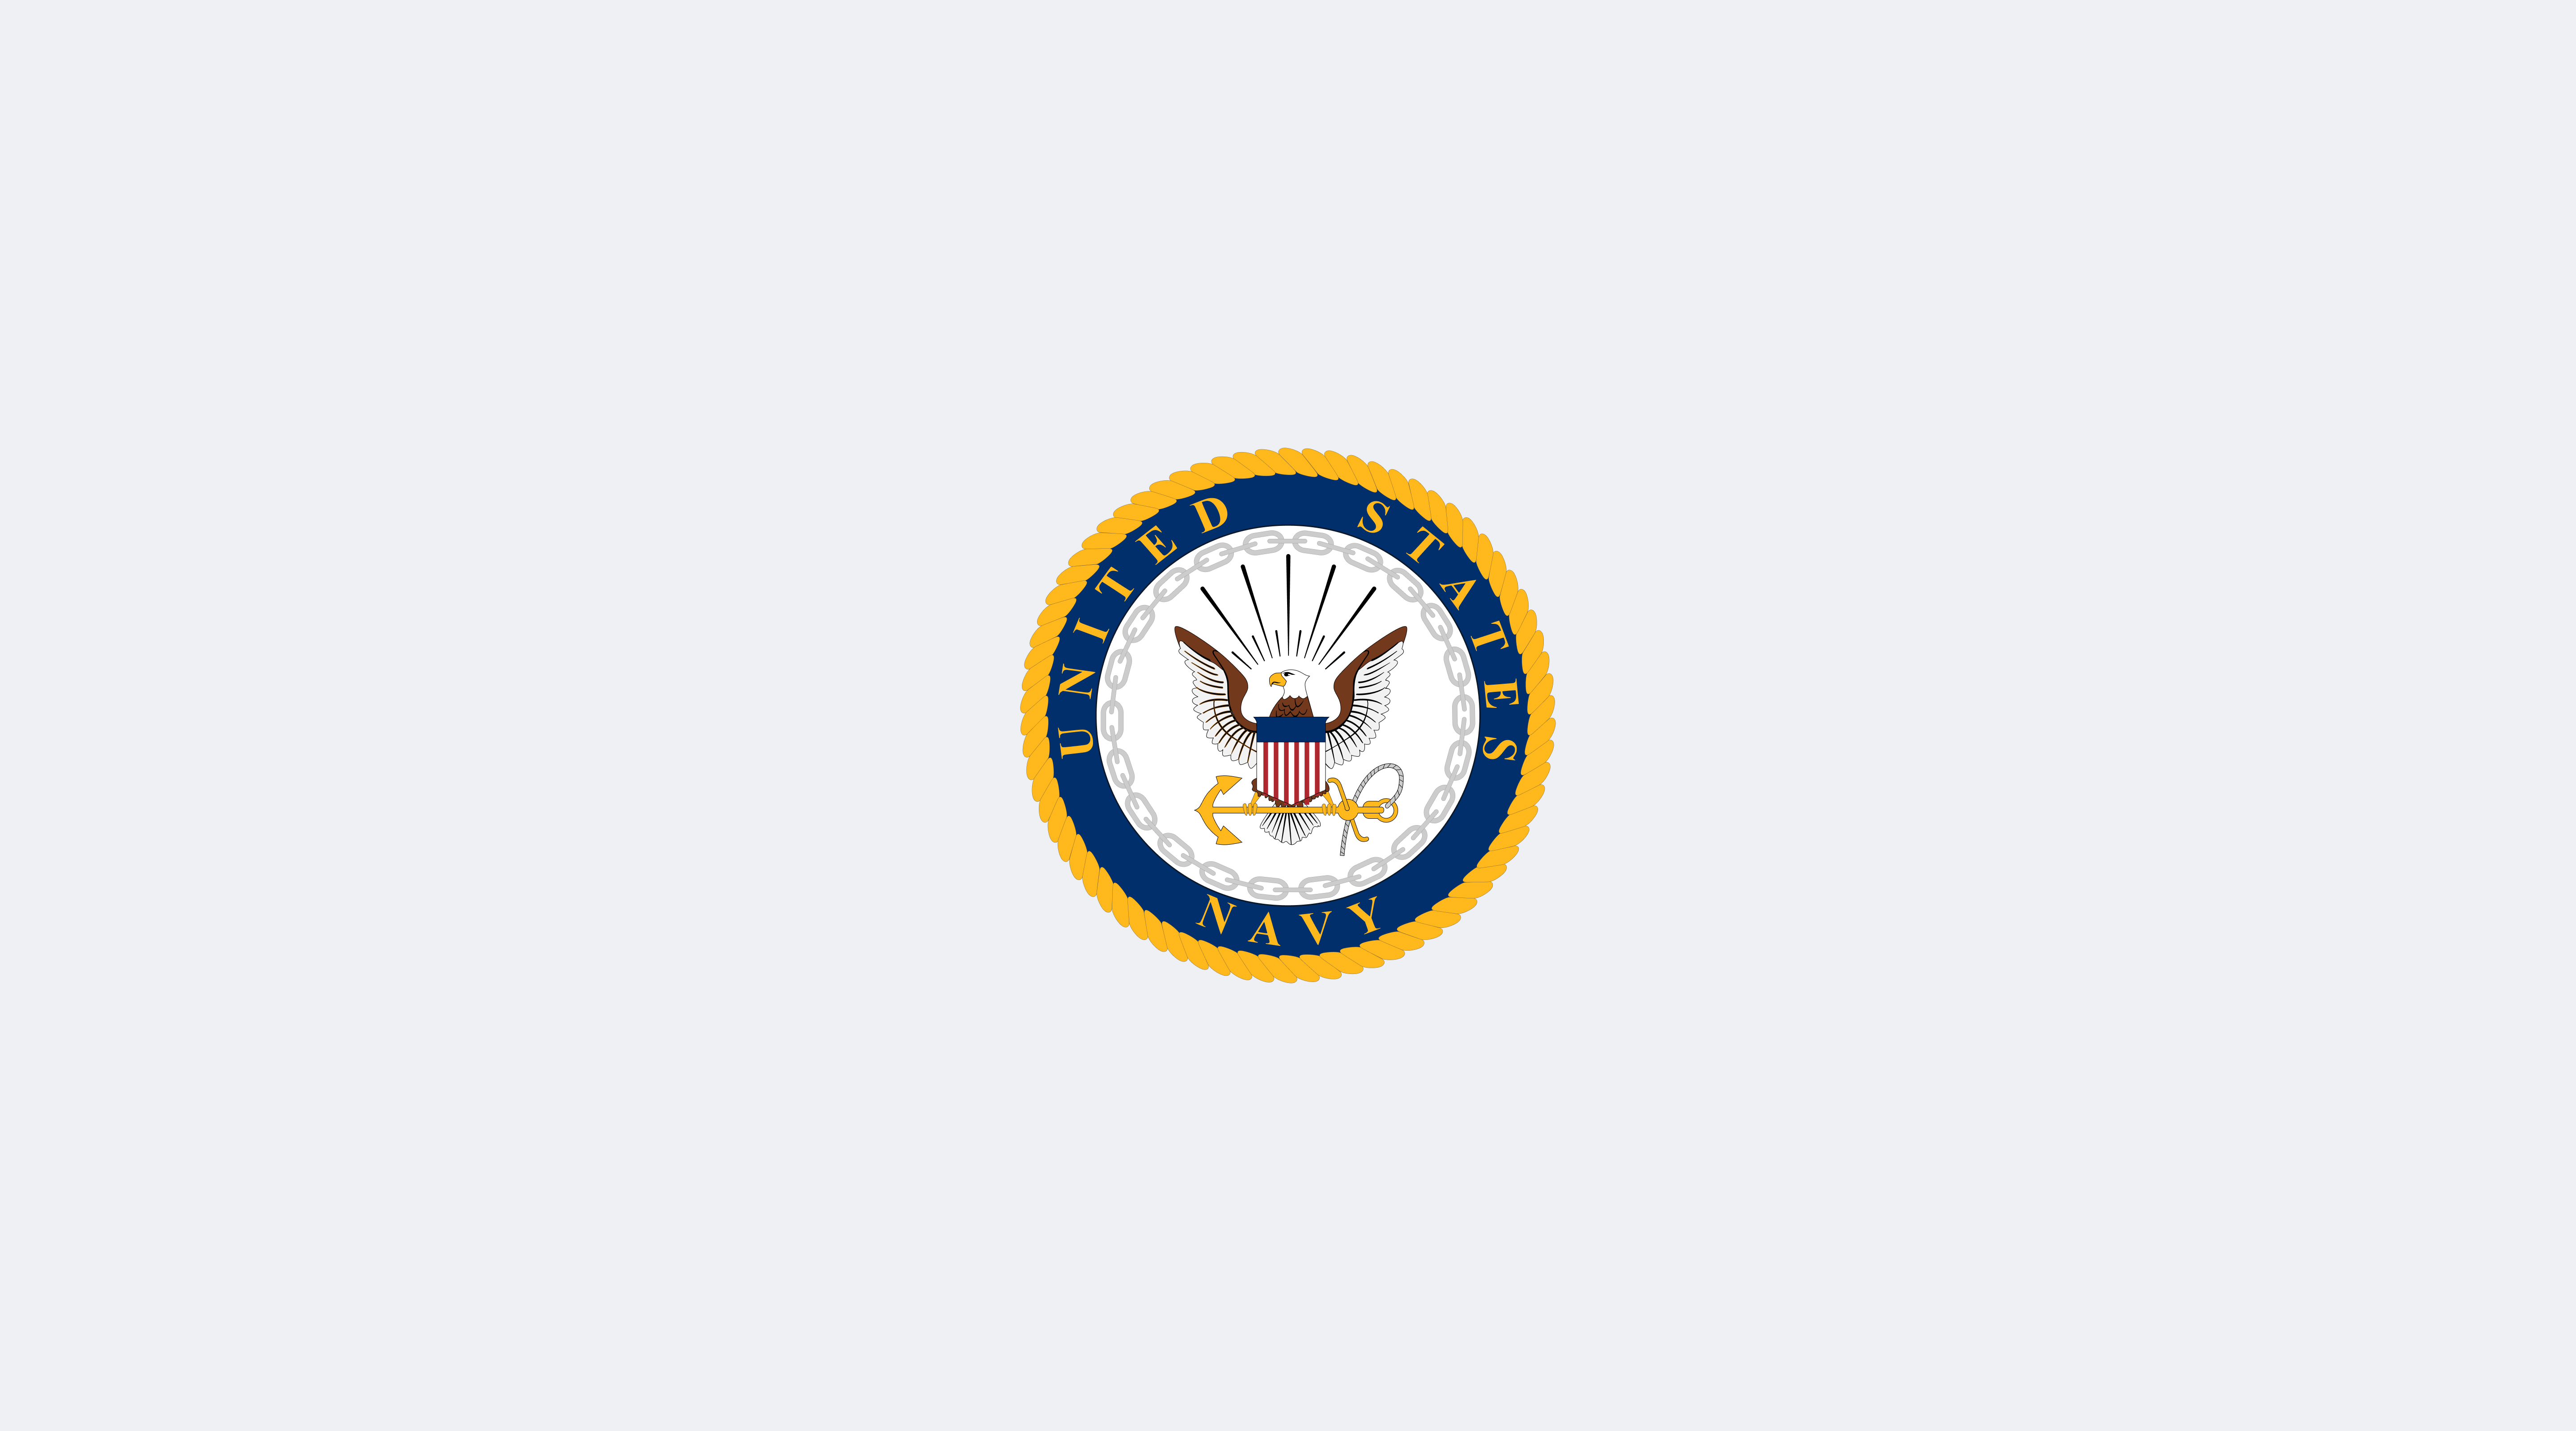 United States Navy logo on a neutral background